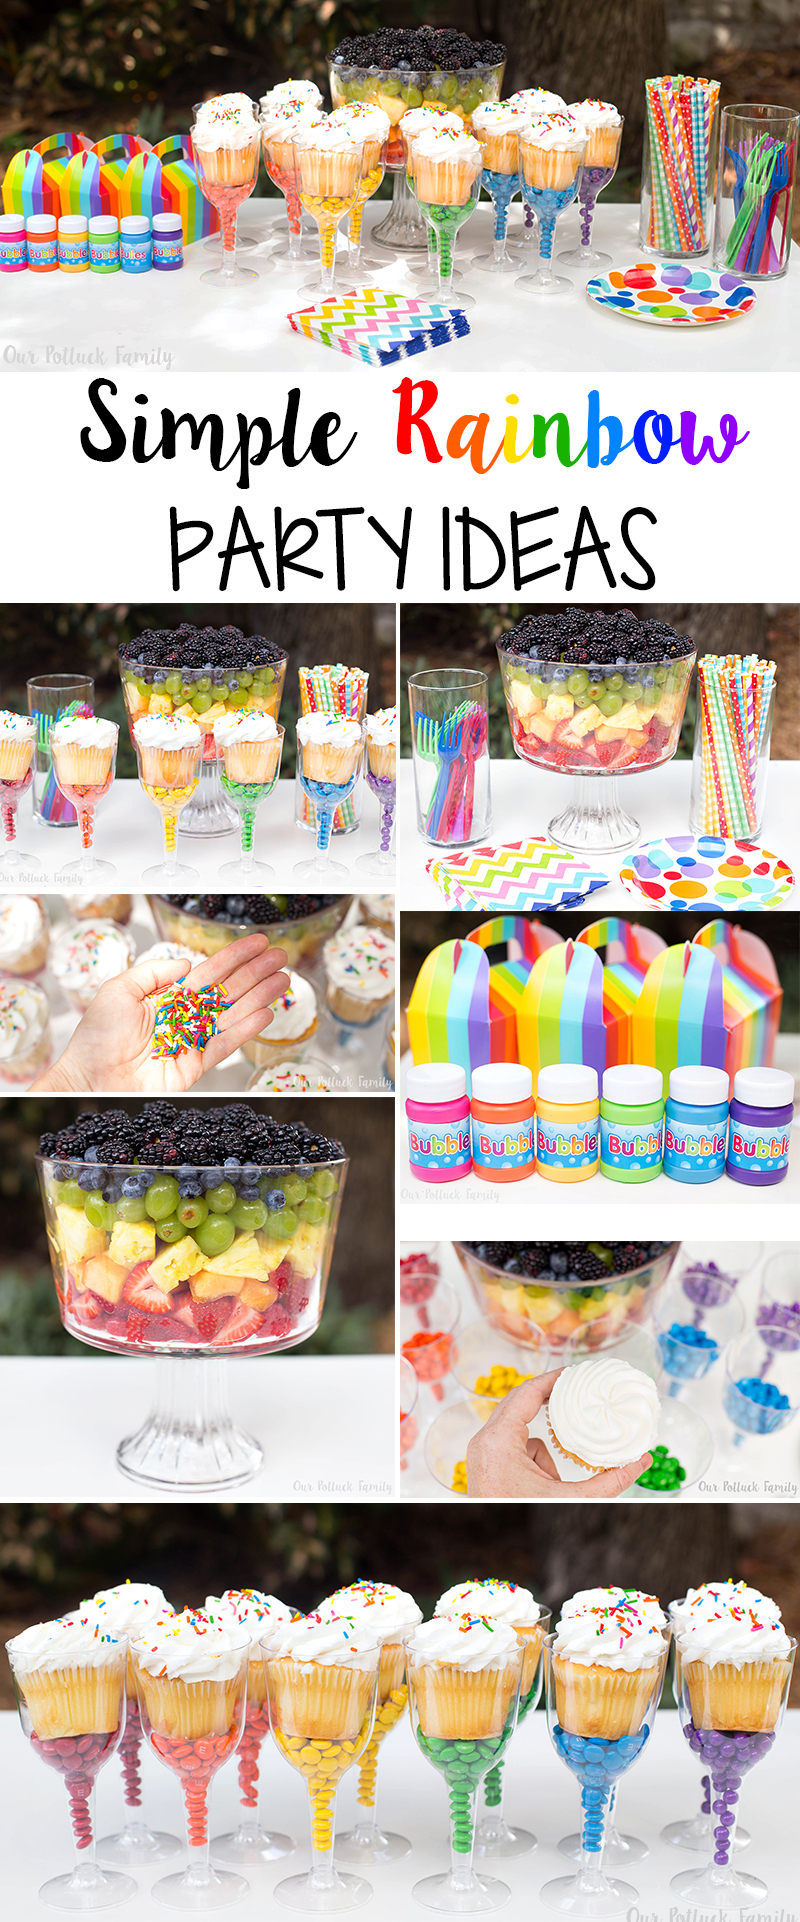 Simple Rainbow Party Ideas - Our Potluck Family